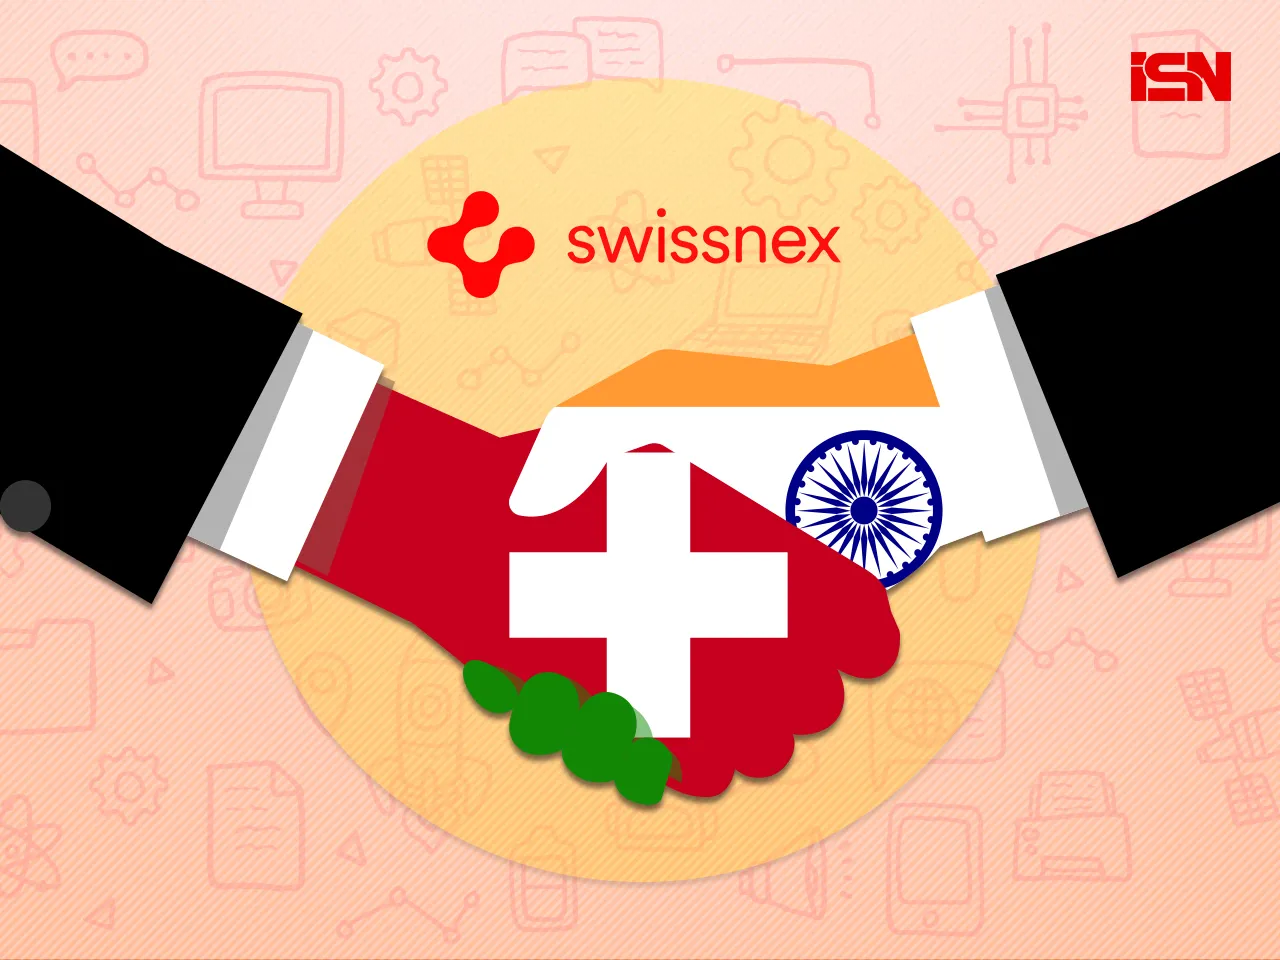 Indo-Swiss innovation platform Swissnex 3.